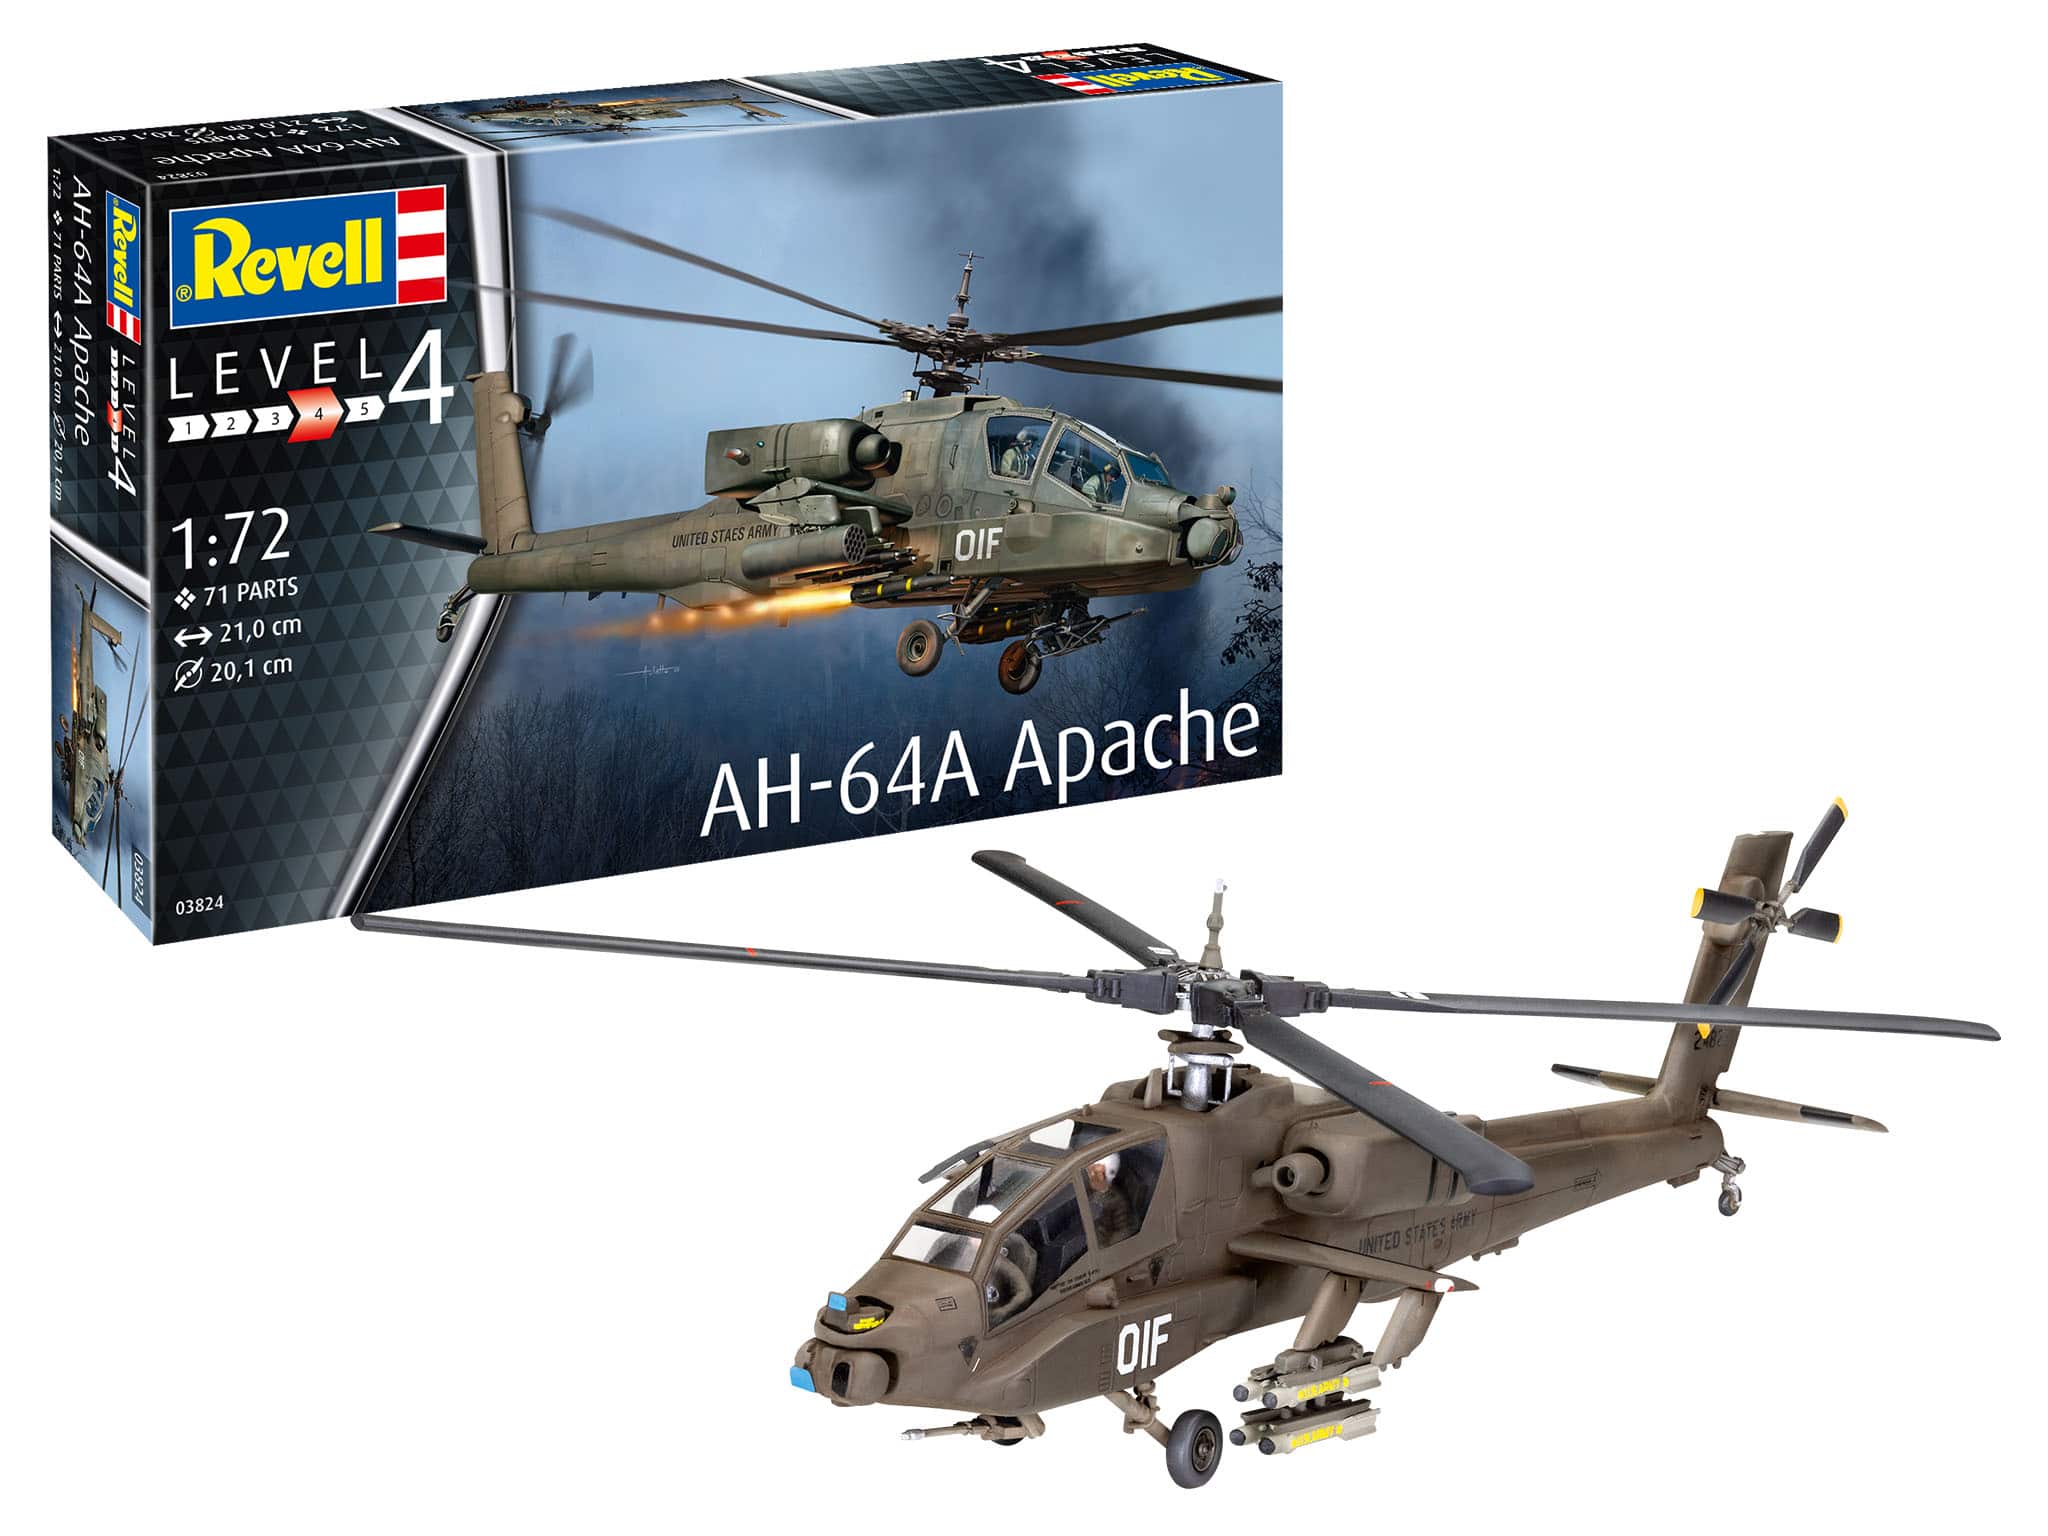 Revell 172 AH-64A Apache 03824